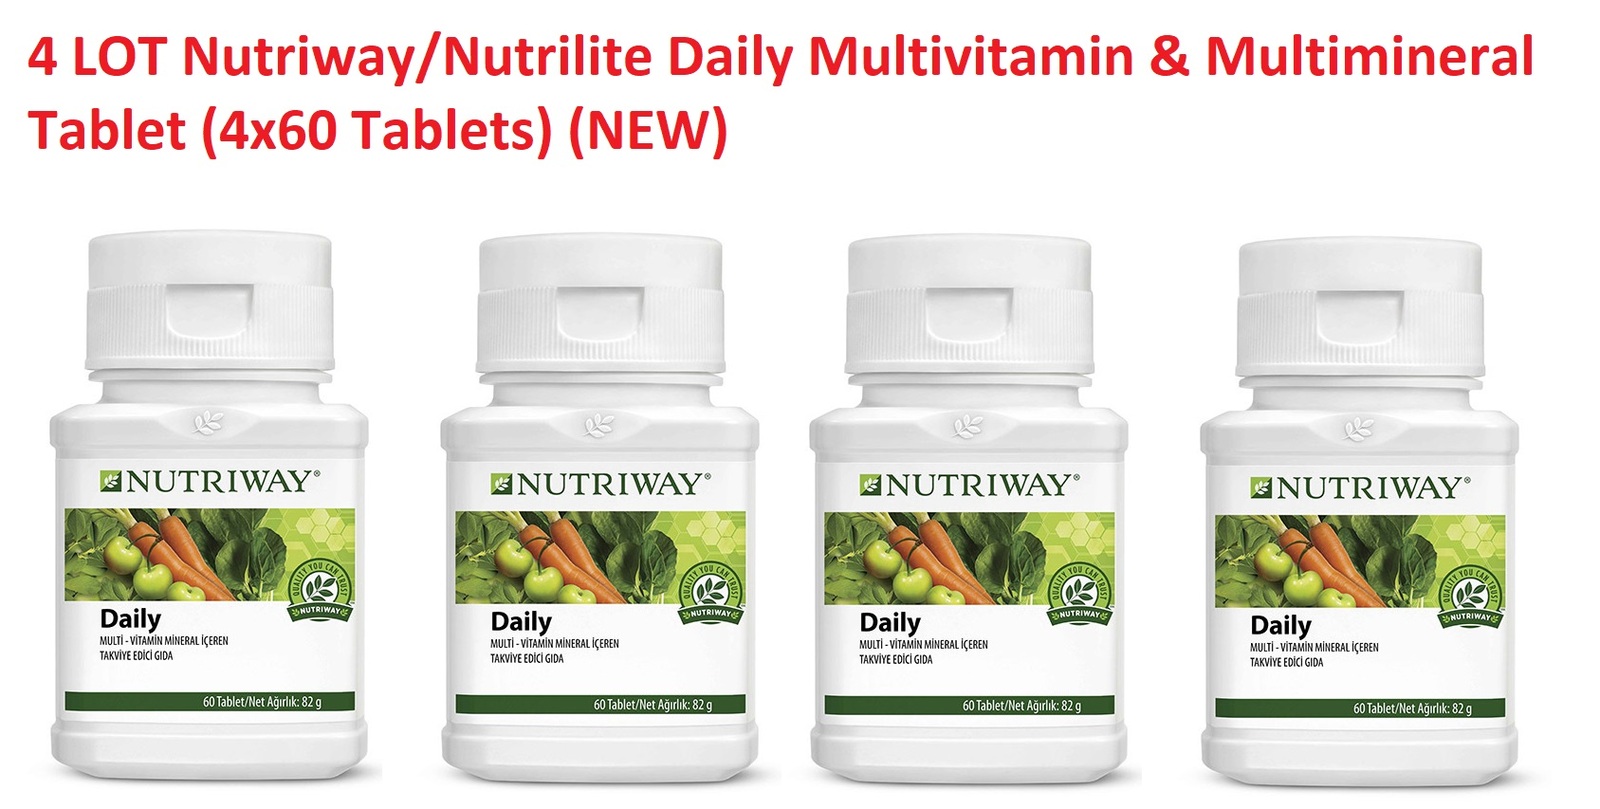 4 LOT Nutriway/Nutrilite Daily Multivitamin & Multimineral Tablet (4x60 Tablets)